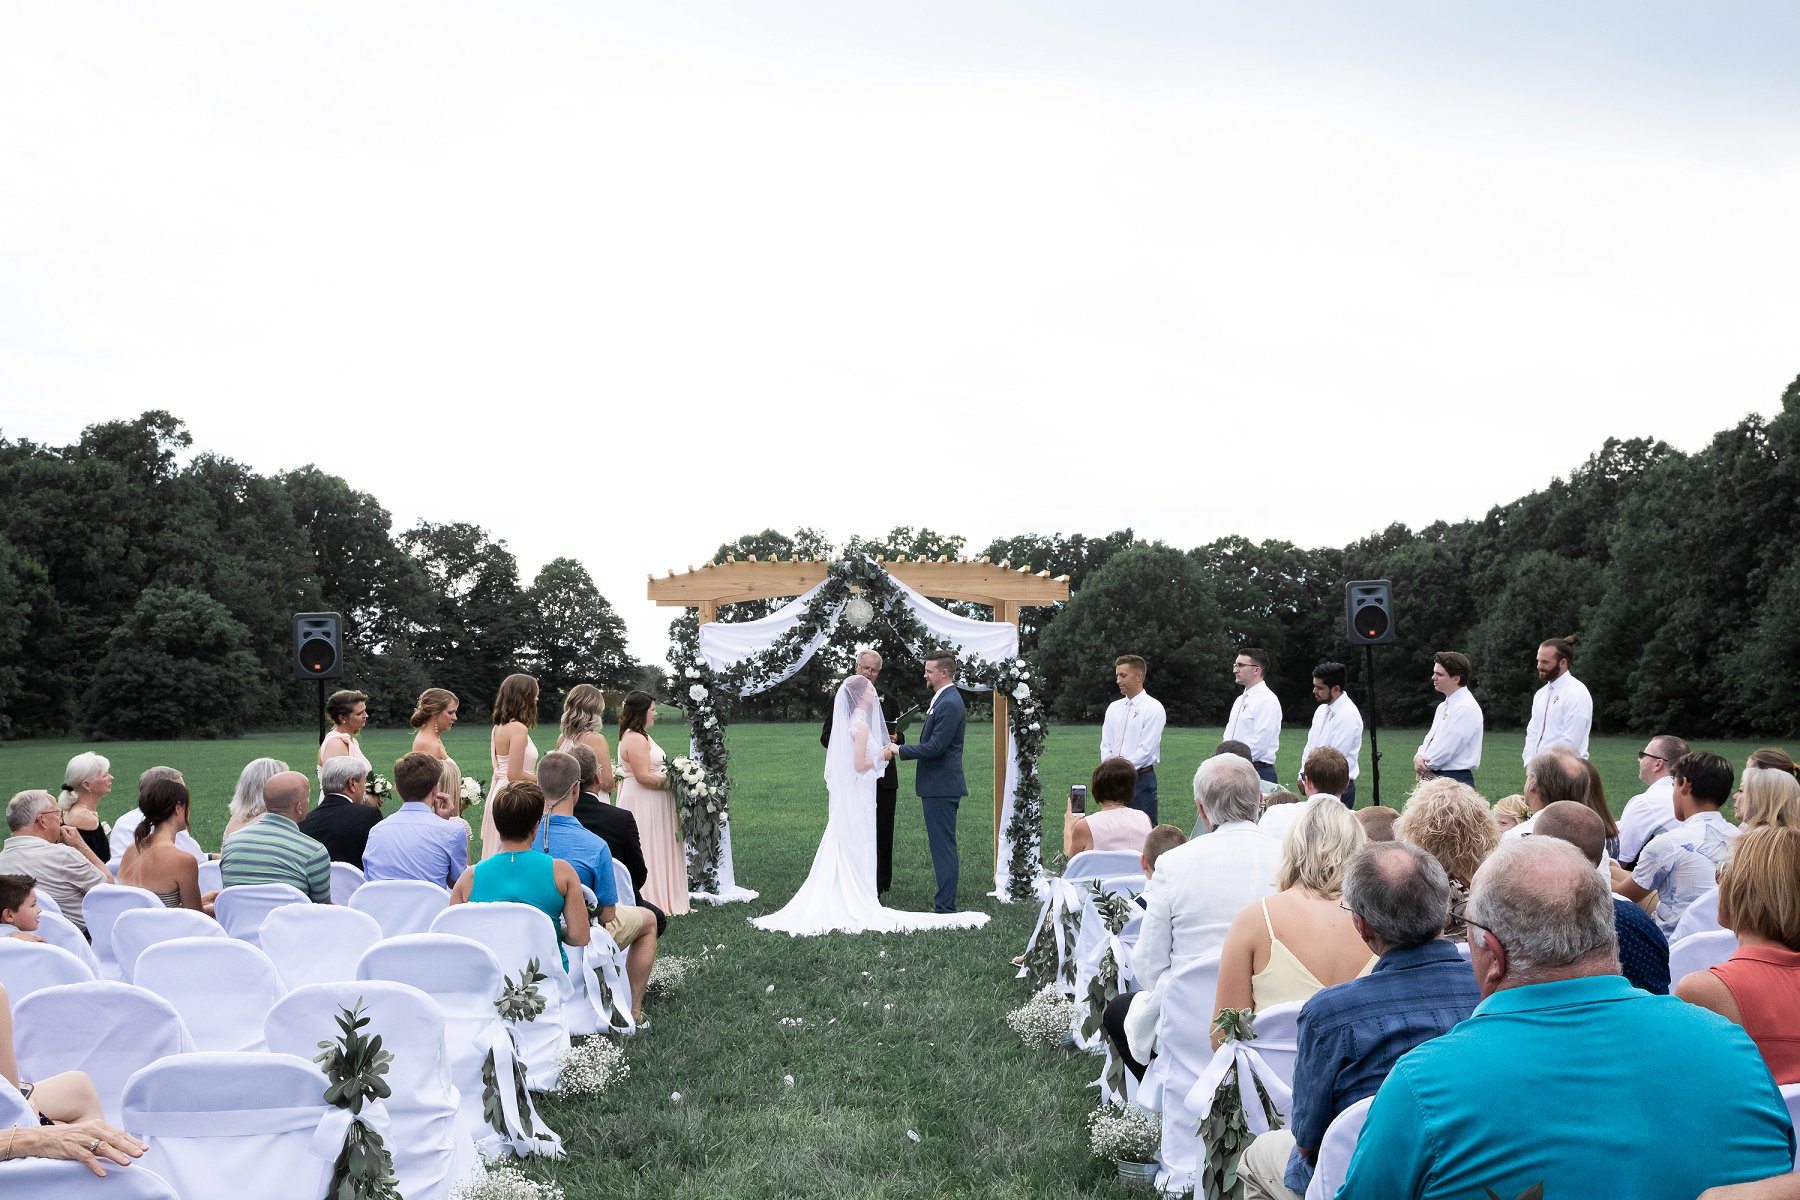 Outdoor Summer Wedding Photography in Kansas City by Merry Ohler, wedding photographer kansas city - 30